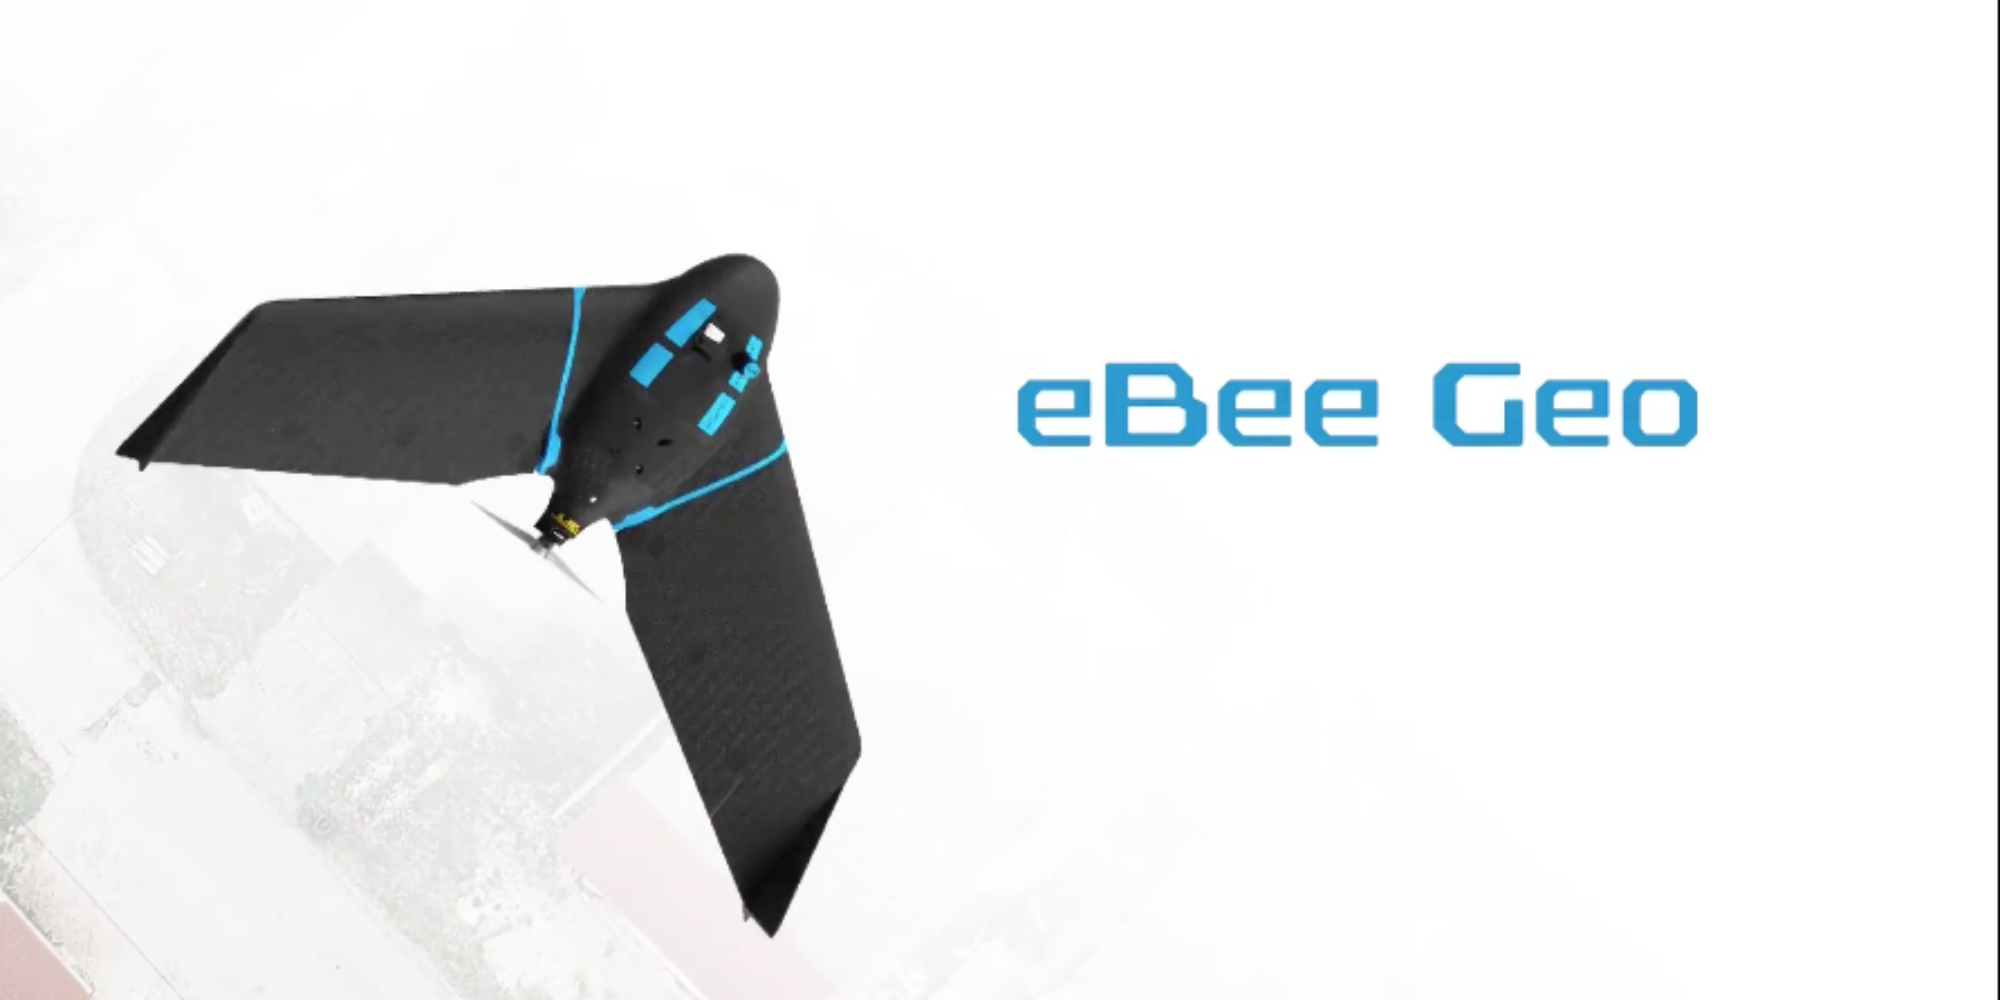 tub Uenighed Forhåbentlig senseFLY releases new eBee Geo drones for $10K US